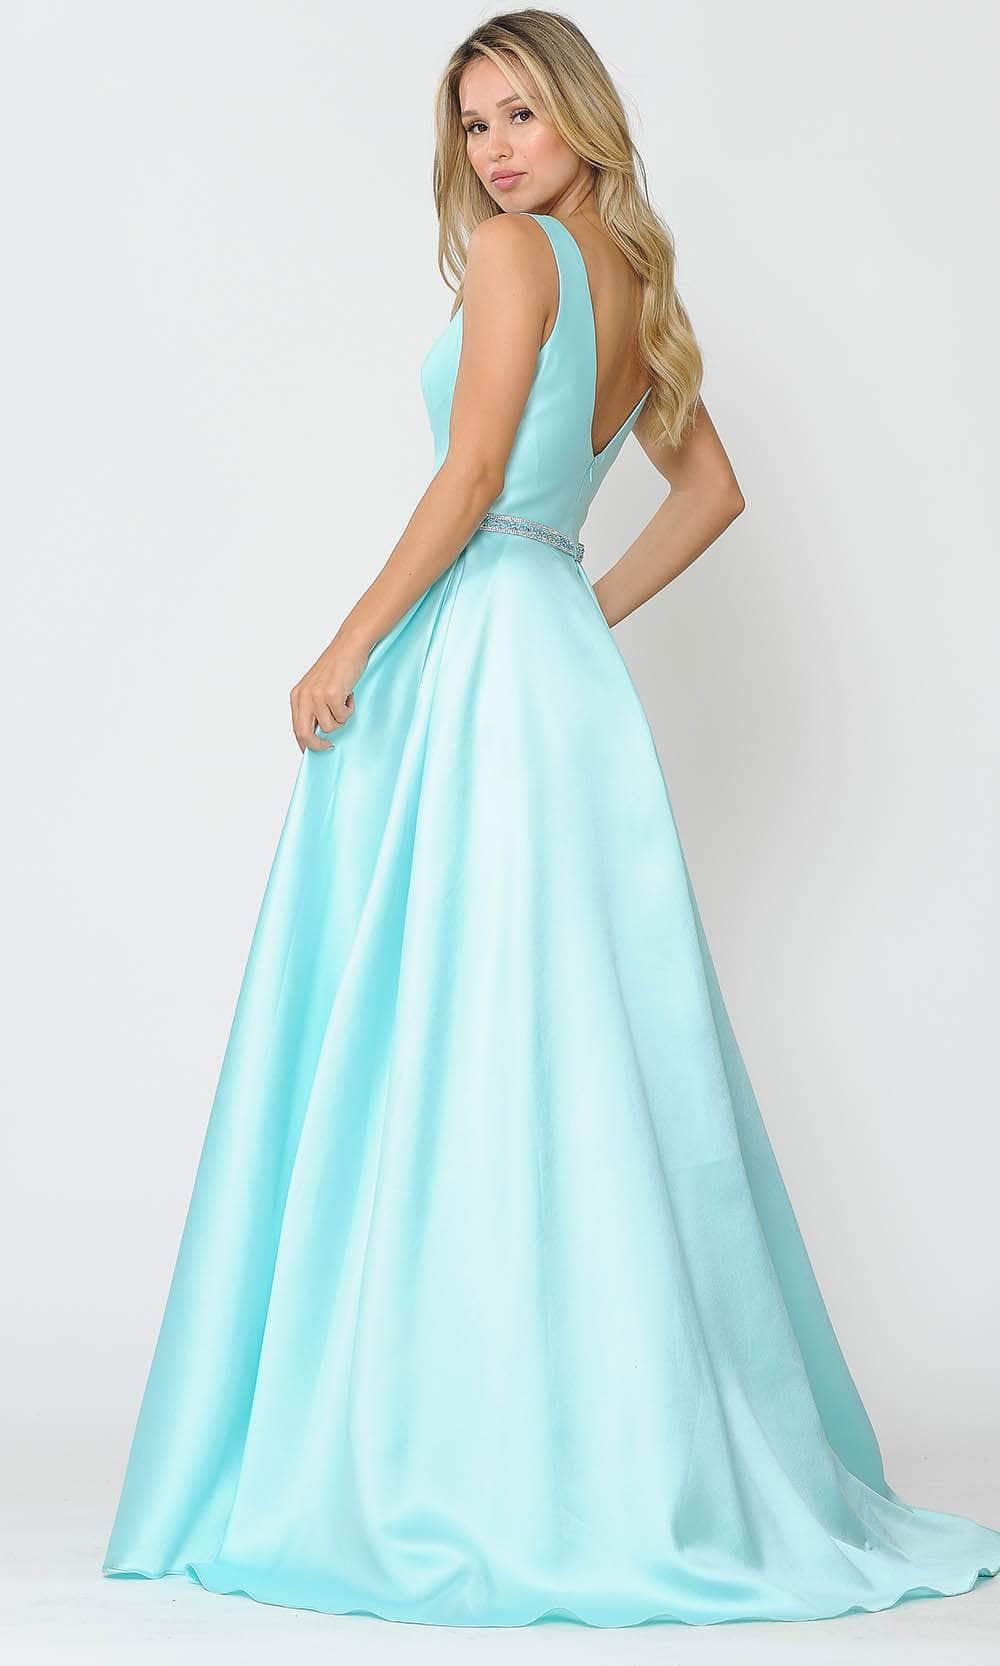 Poly USA 8678 - Sleeveless Dress